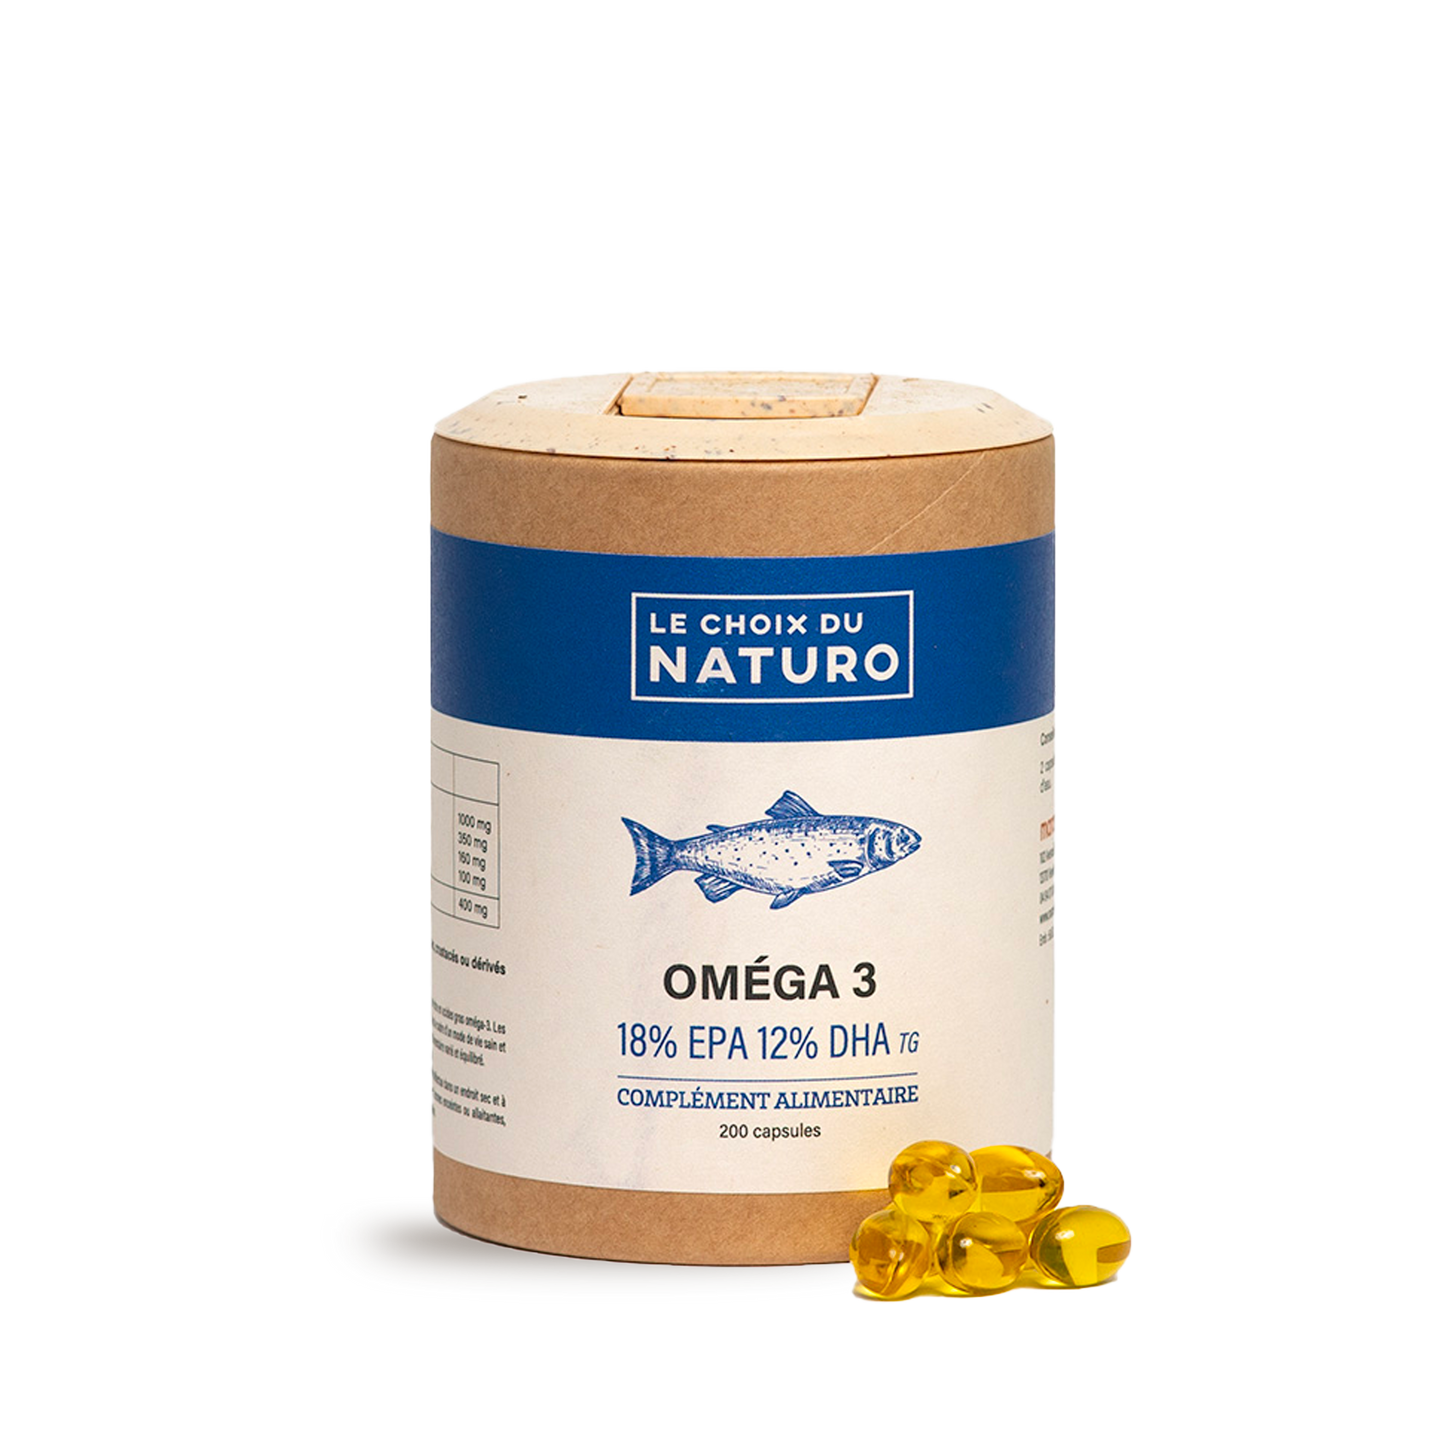 Oméga 3 EPA et DHA - 200 capsules